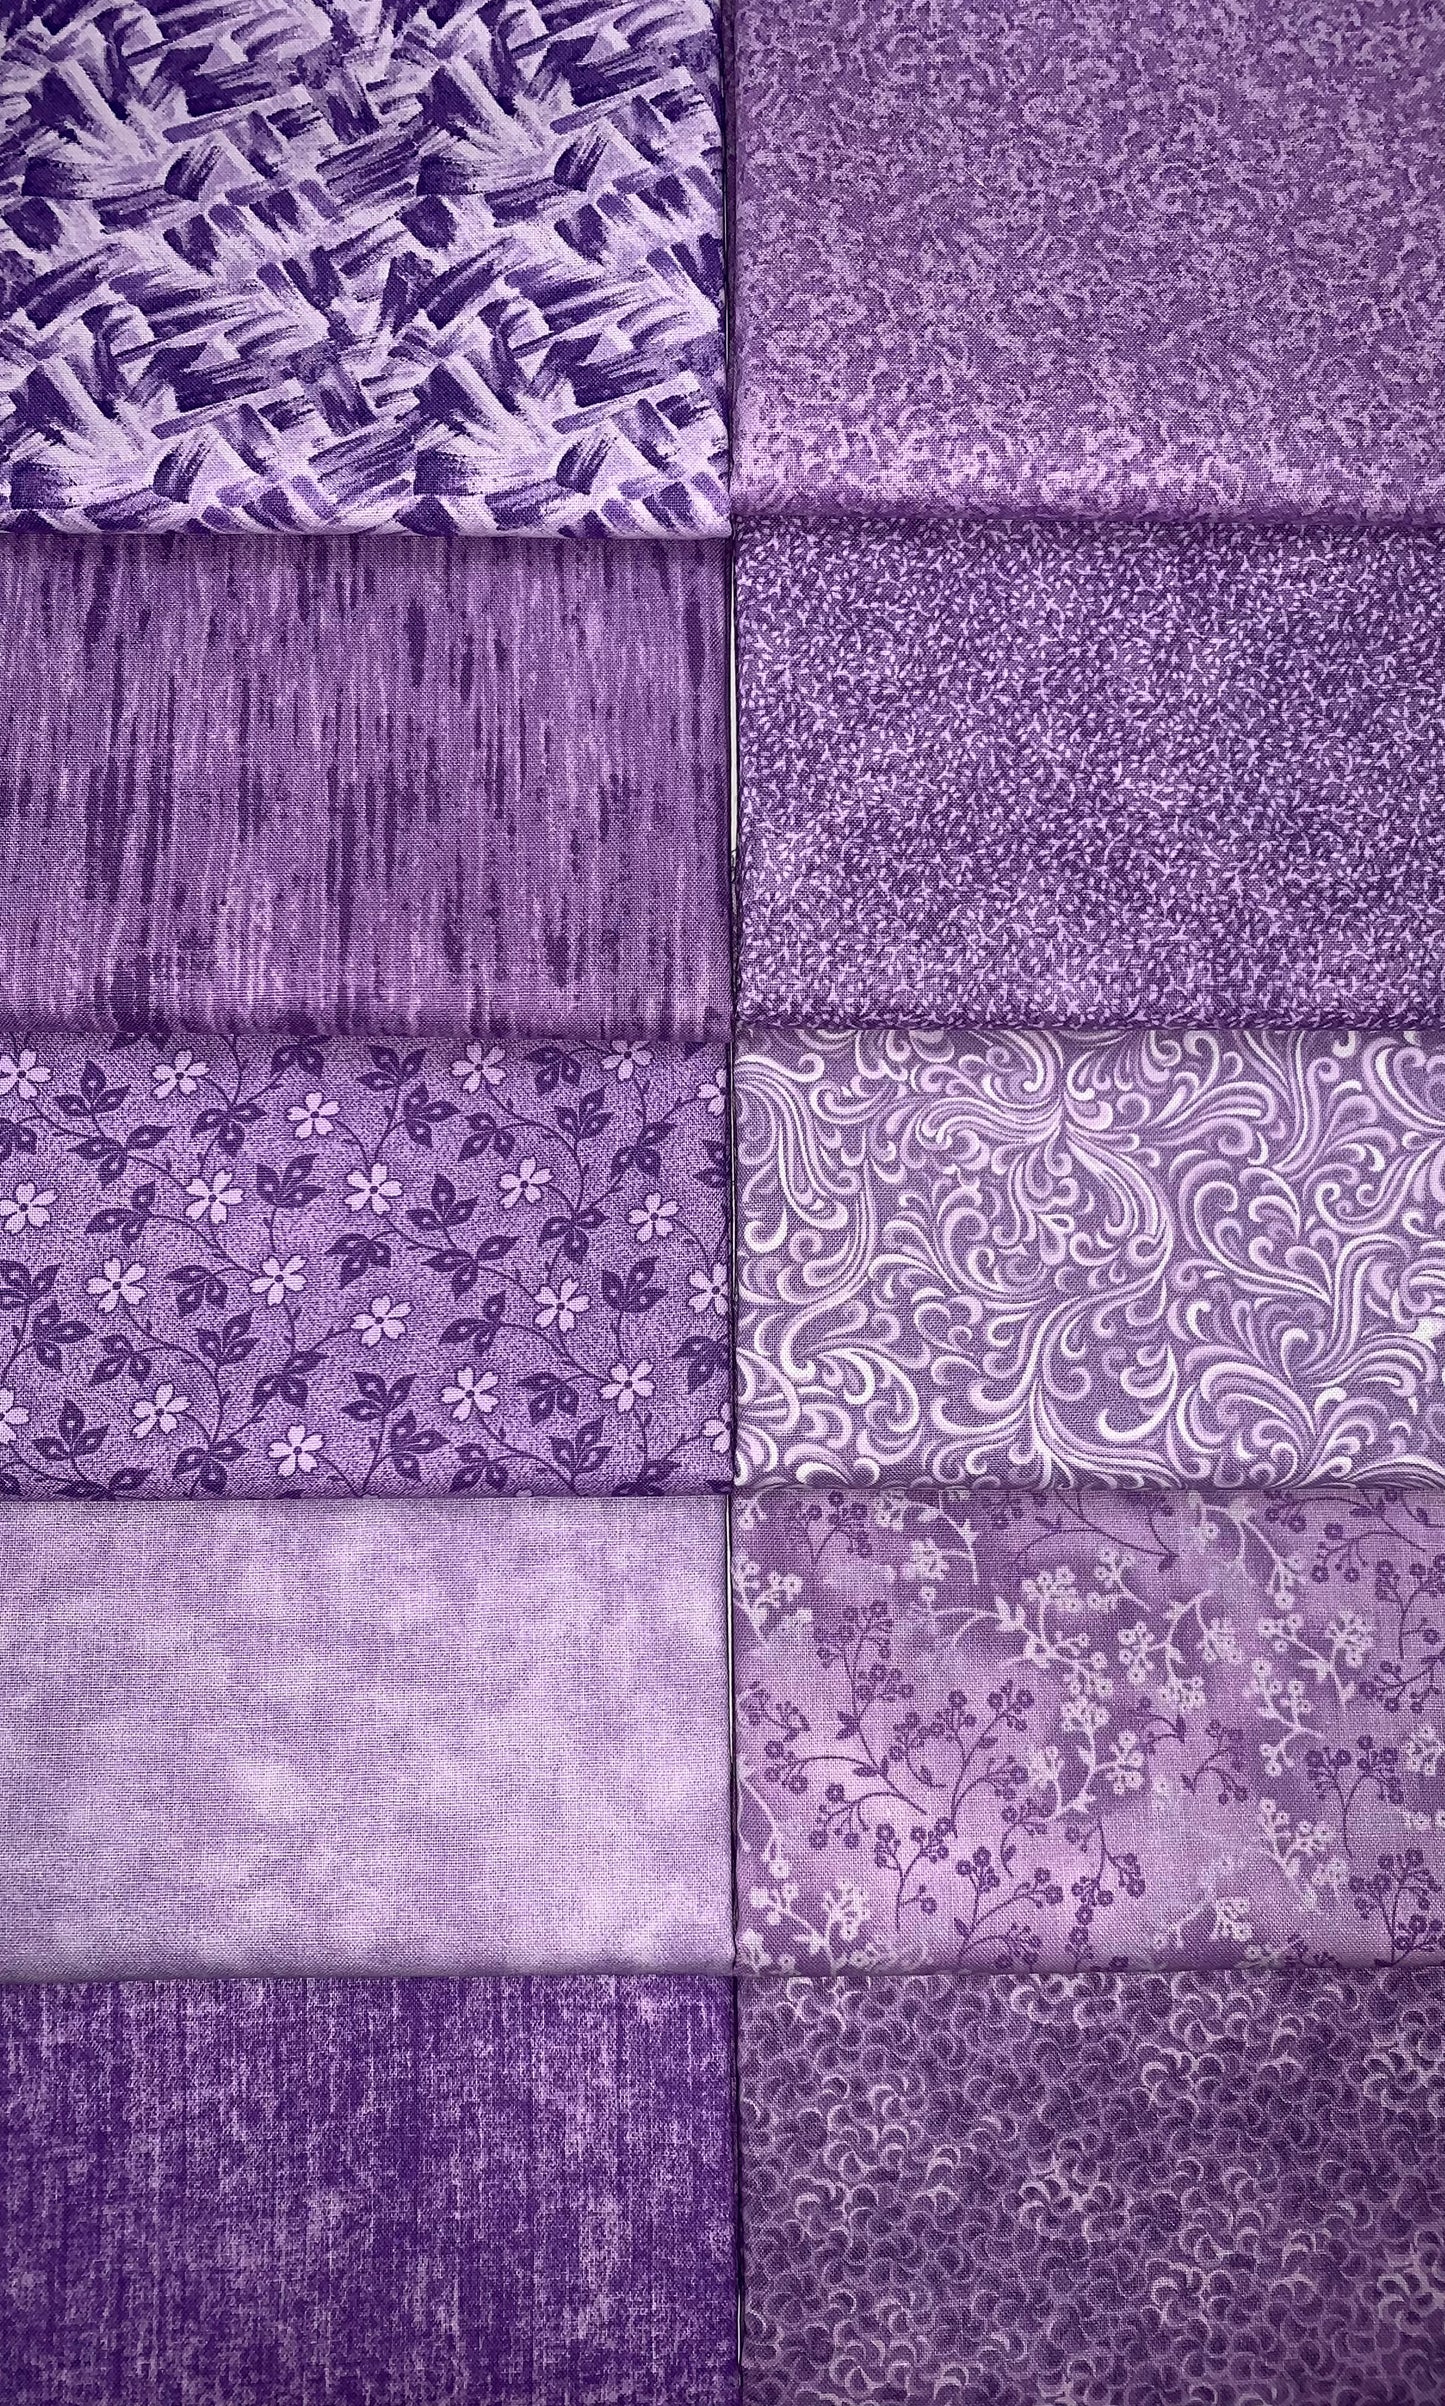 Basic Colors - Lavender Half-yard Bundle - 10 Fabrics, 5 Total Yards